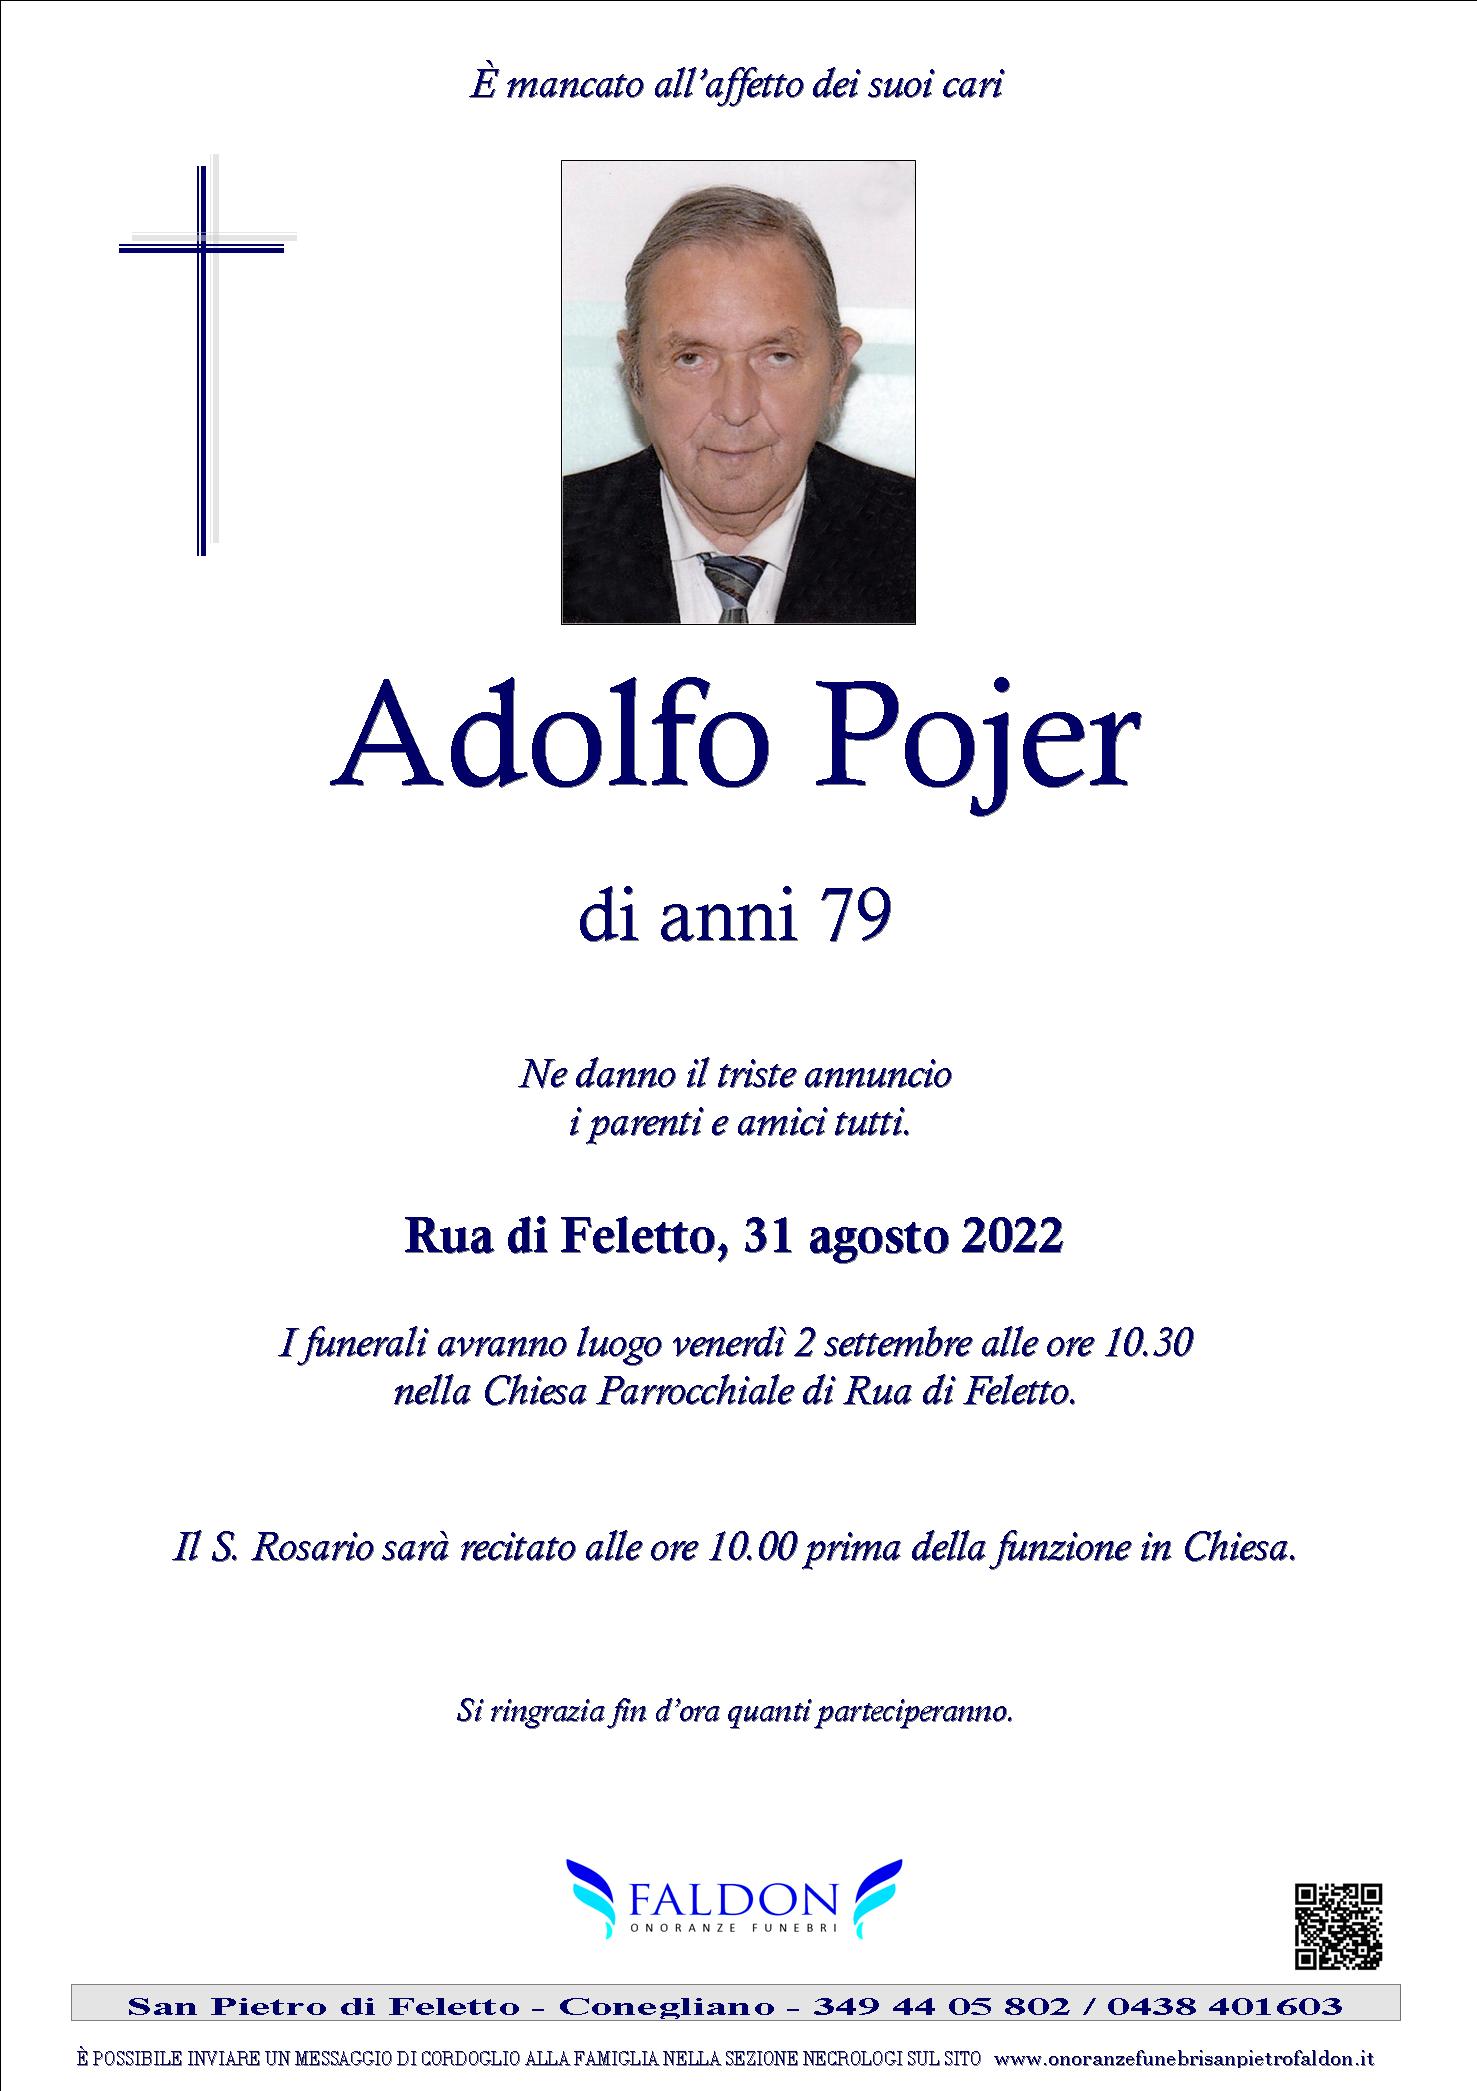 Adolfo Pojer